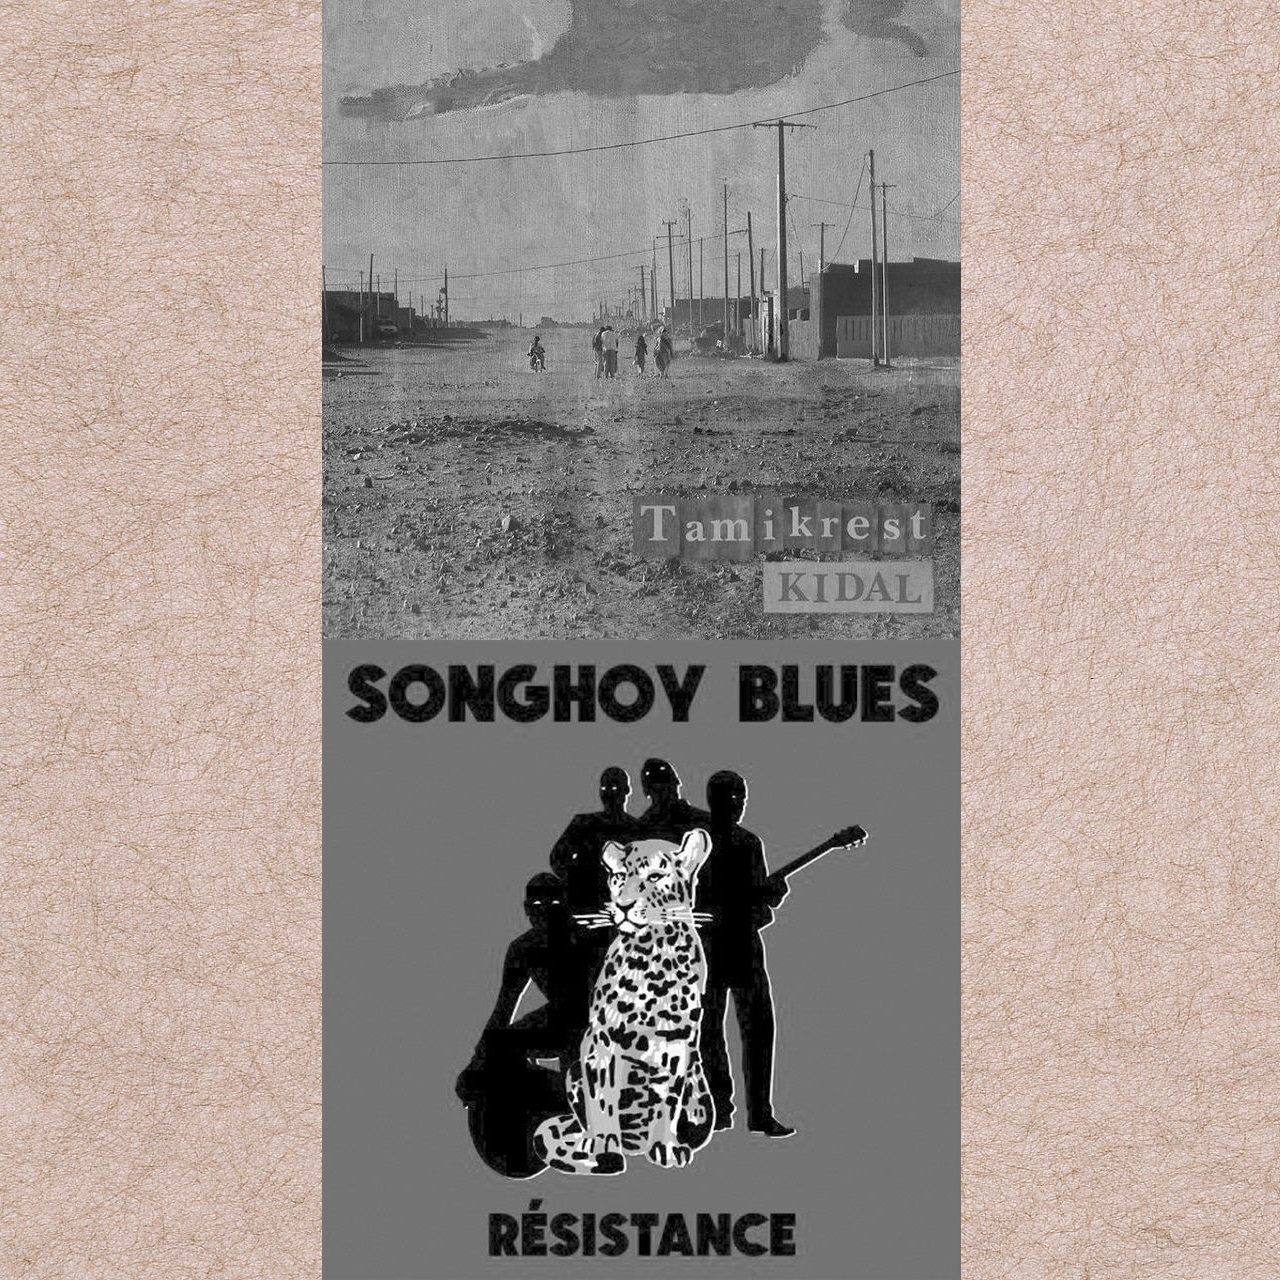 I Tamikrest ed i Songhoy Blues – Deserto e città